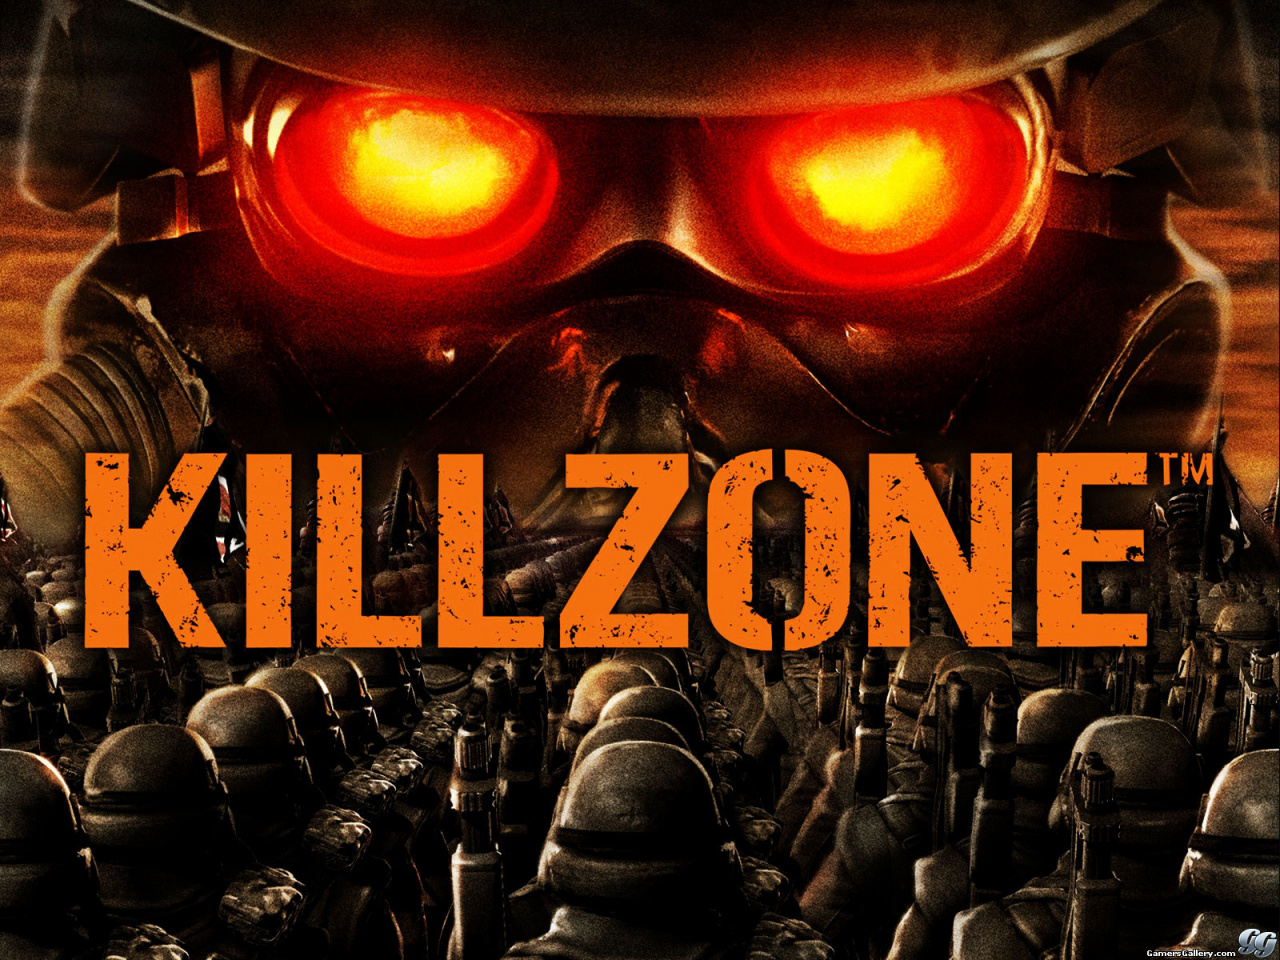 Killzone 1 for PS3 delayed indefinitely